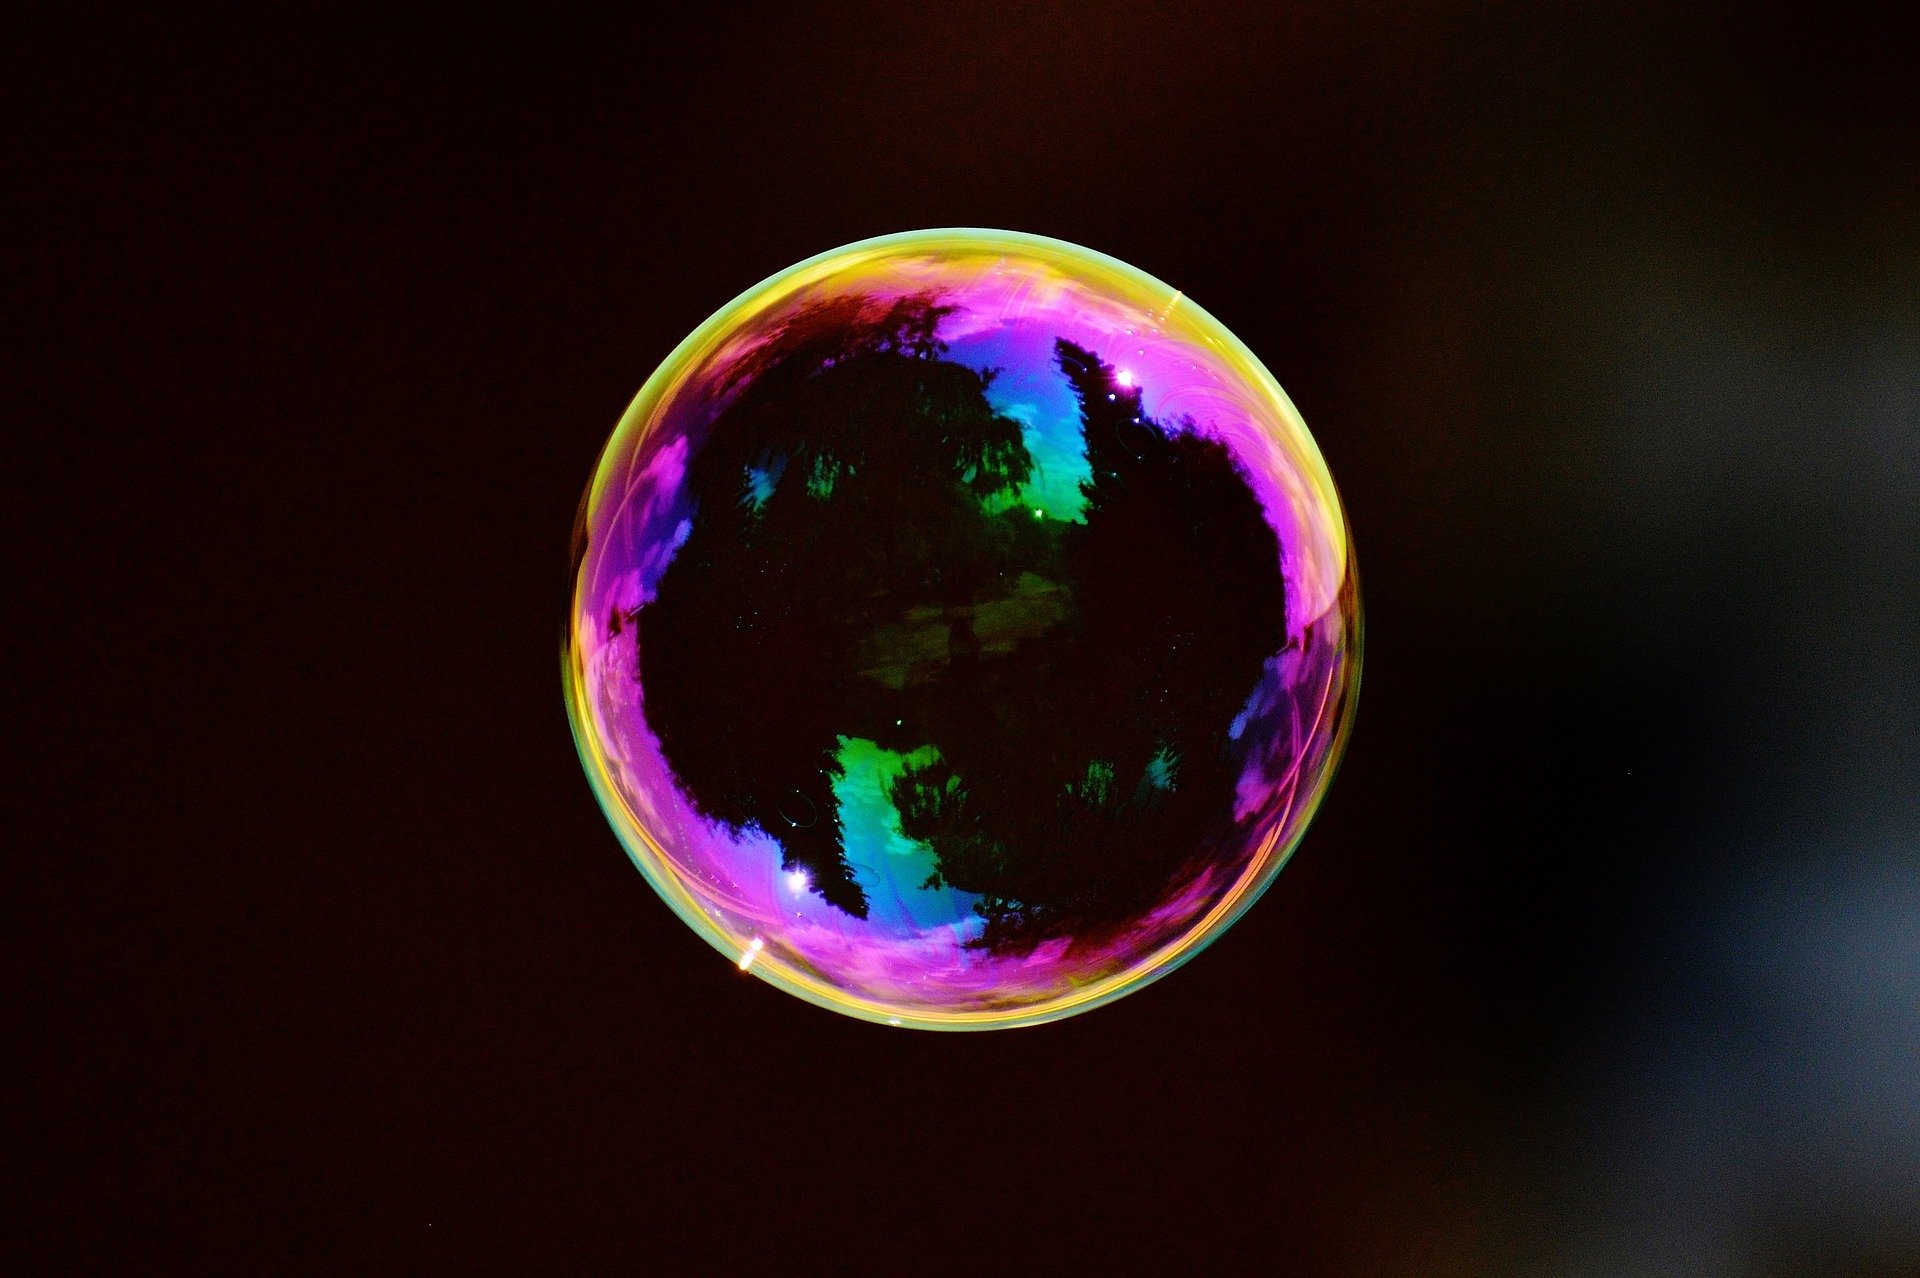 Math describes how bubbles pop